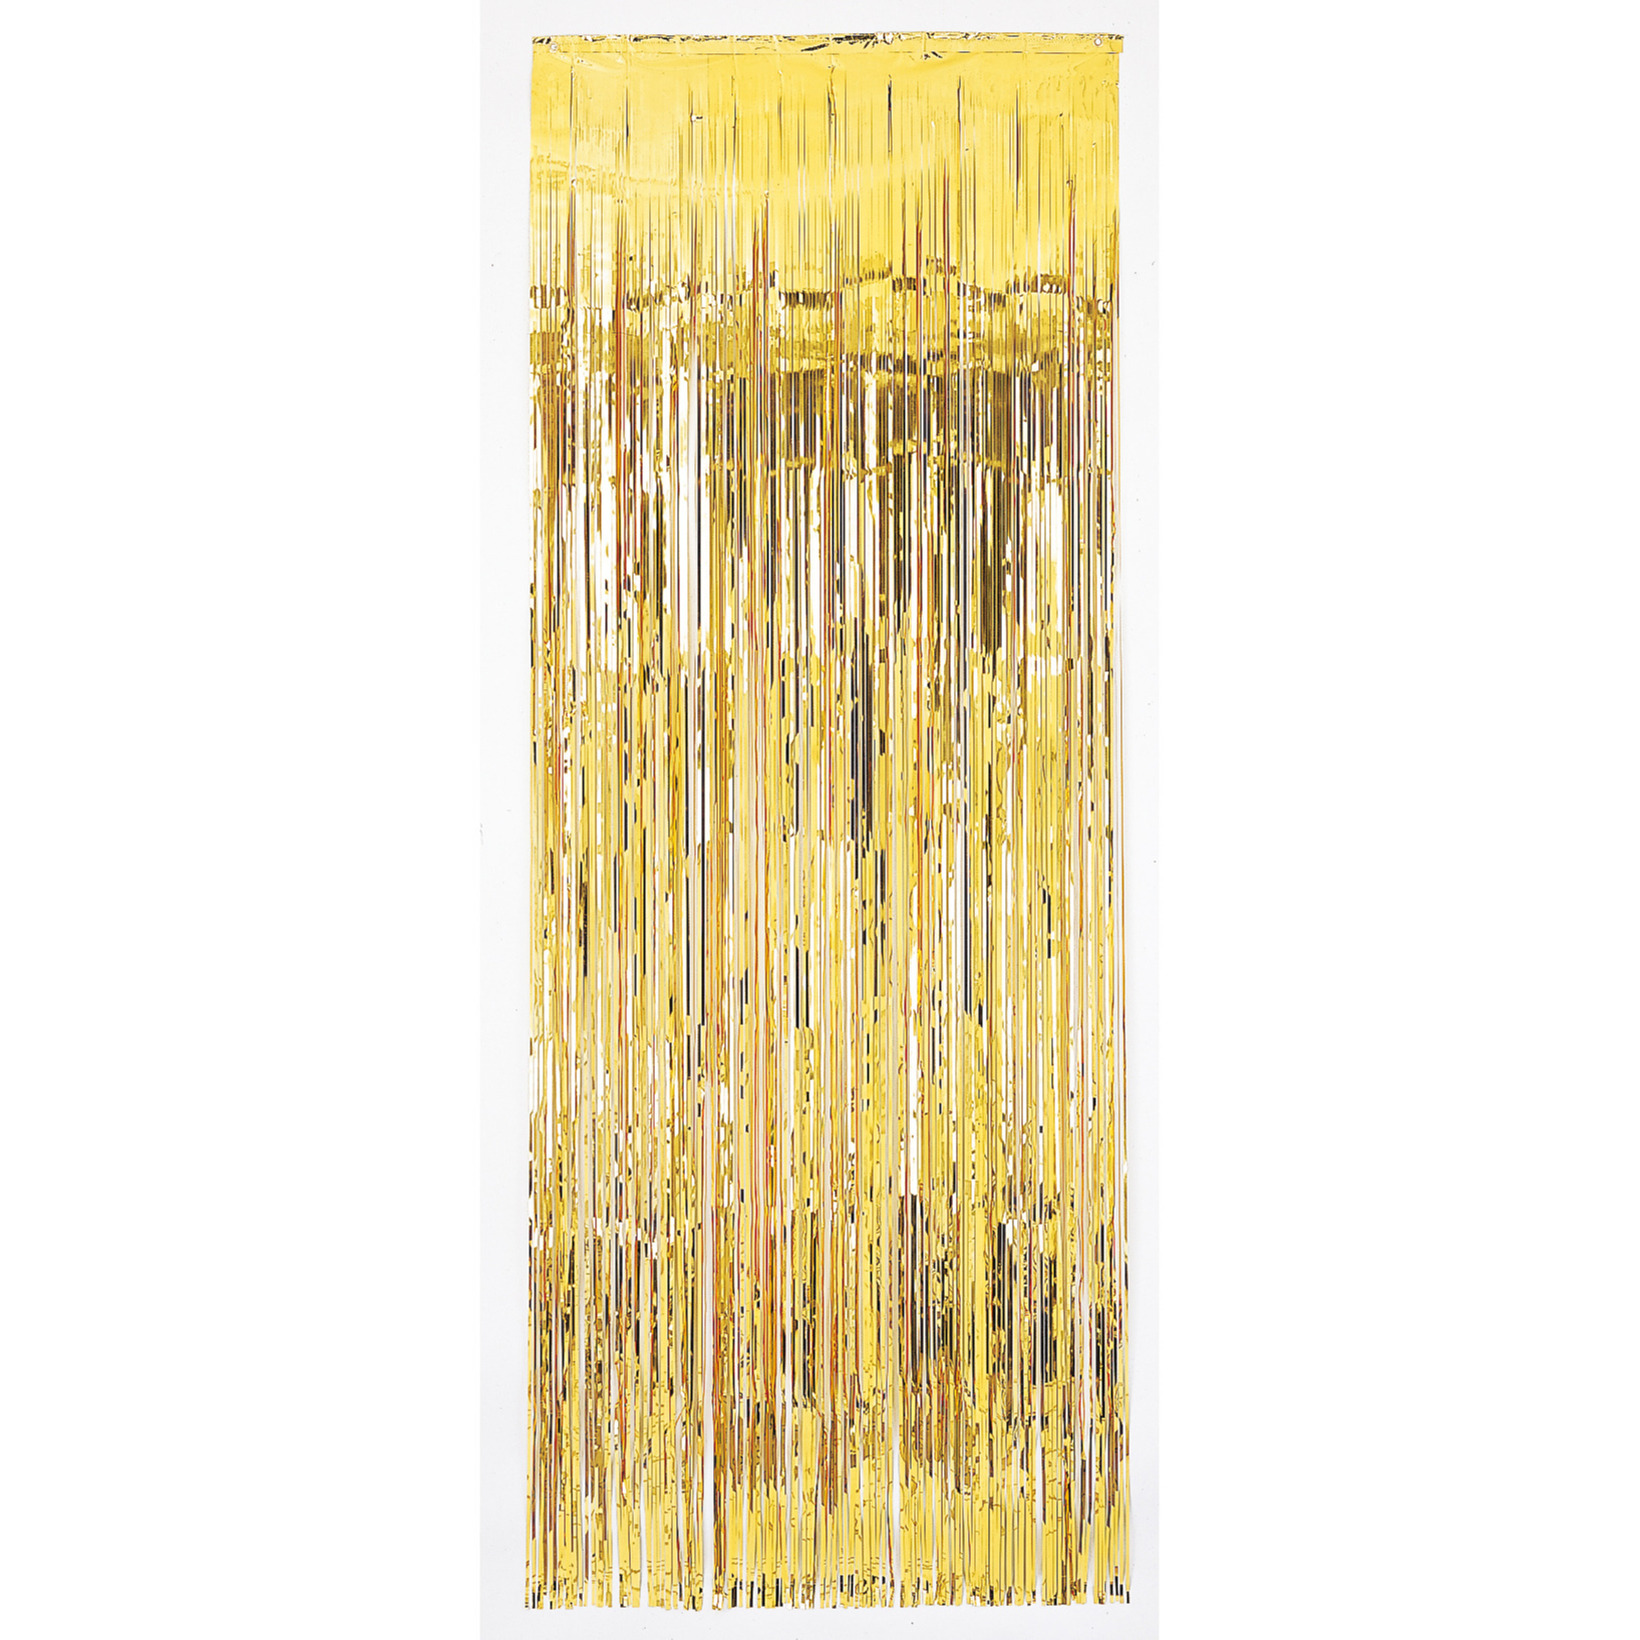 Folie deurgordijn goud metallic 243 x 91 cm